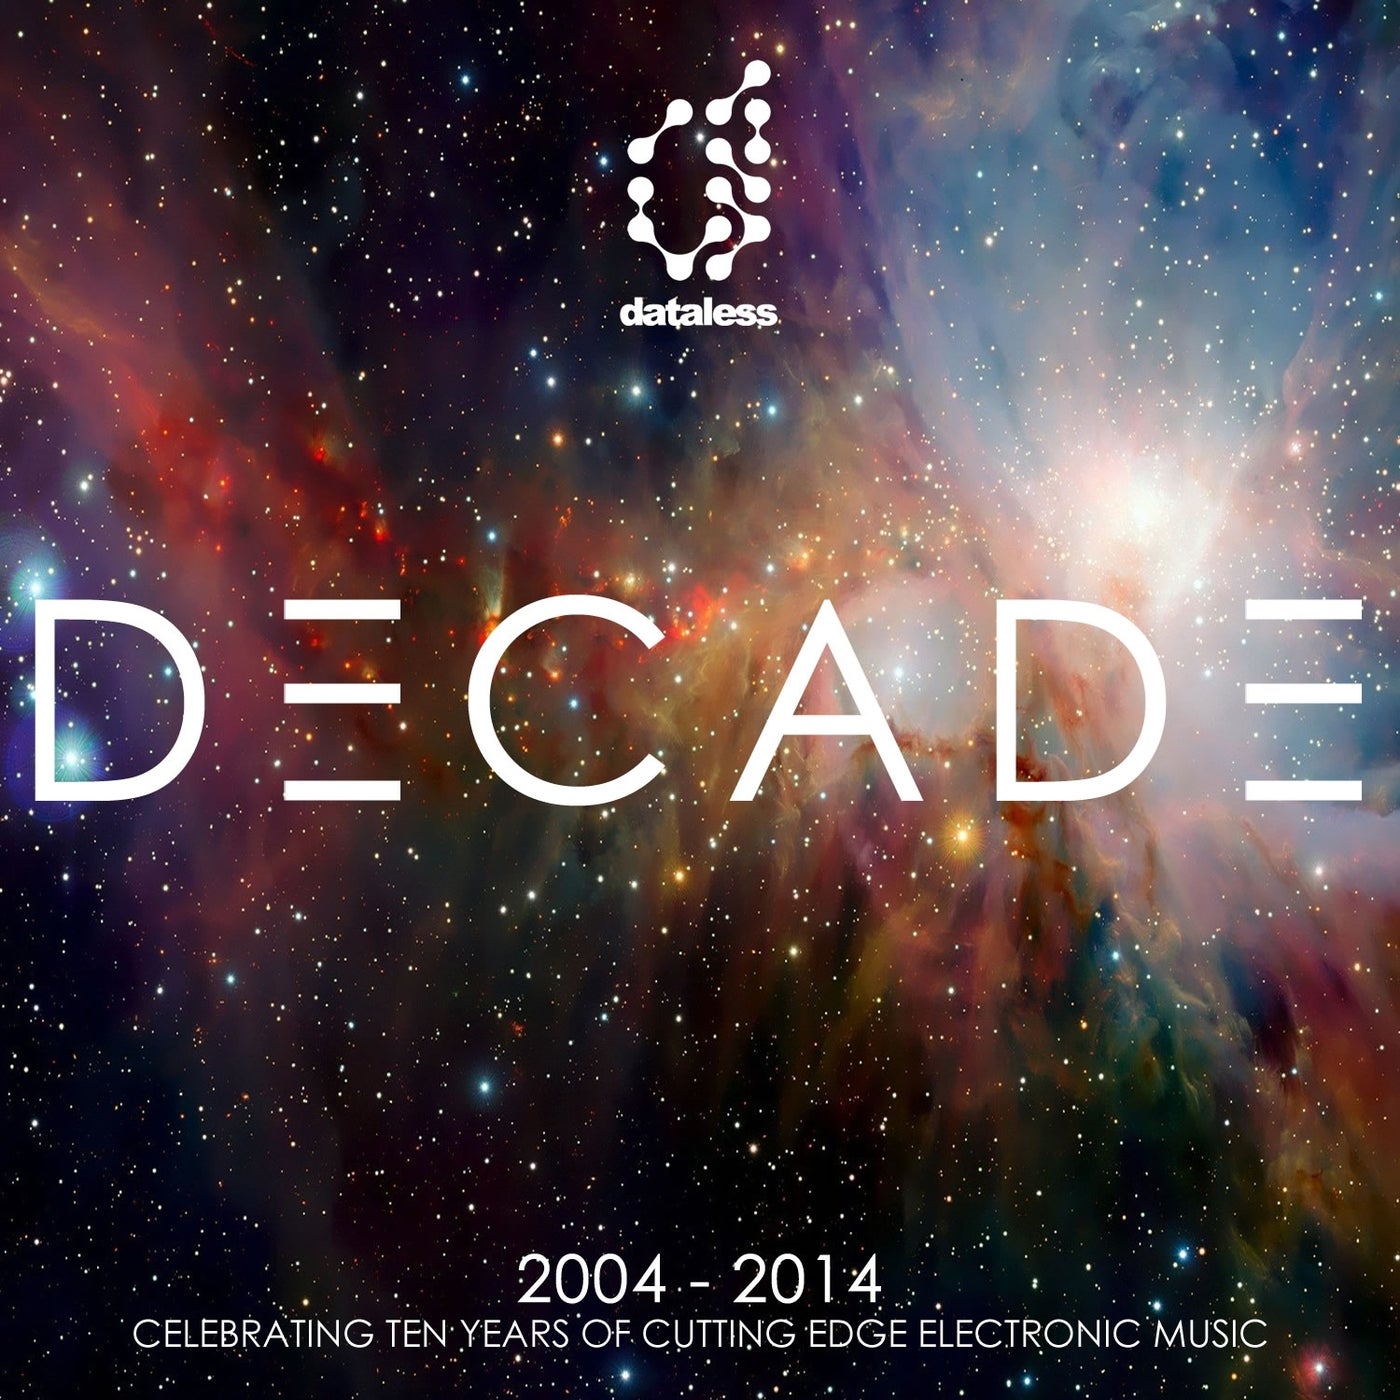 Decade (2004 - 2014) - Celebrating Ten Years of Cutting Edge Electronic Music